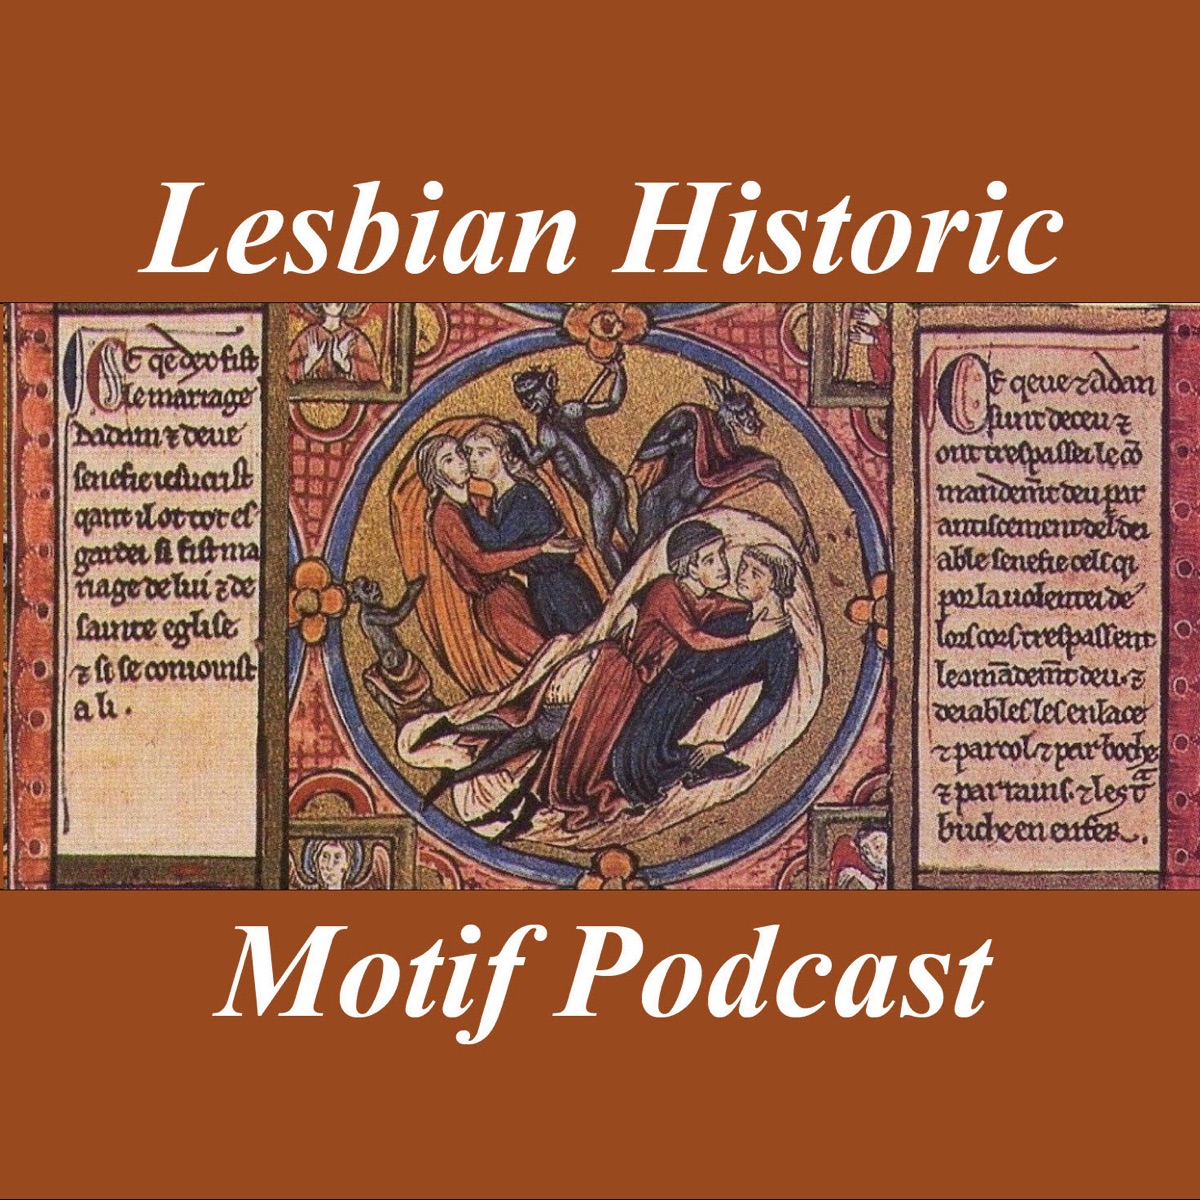 Alexis Grace Lesbian - The Lesbian Historic Motif Podcast â€“ Podcast â€“ Podtail